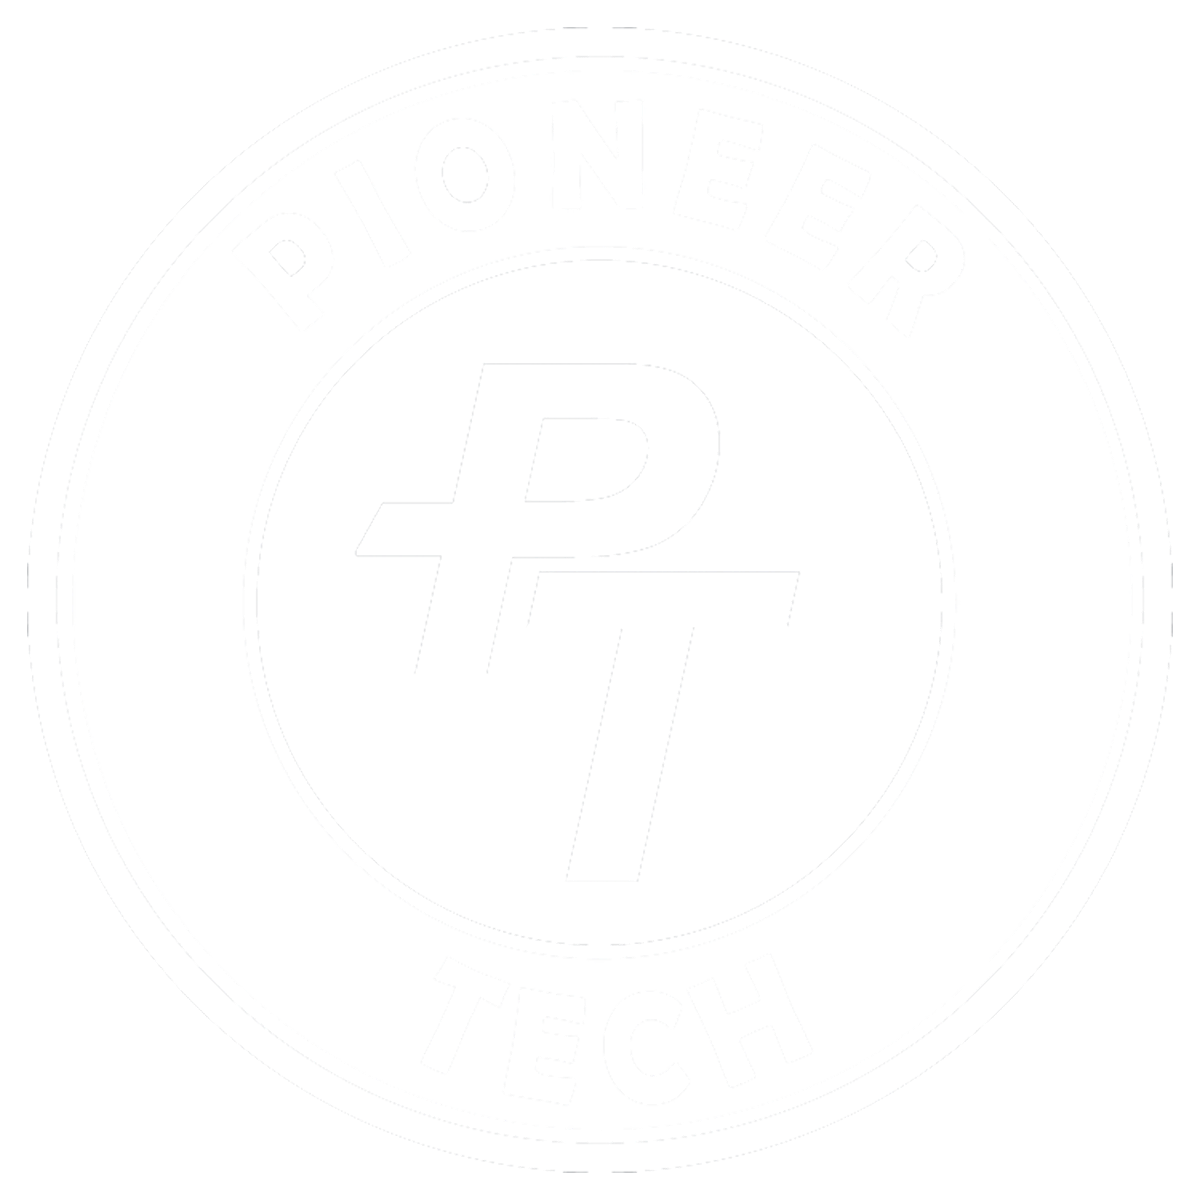 Pioneer Tech Logo